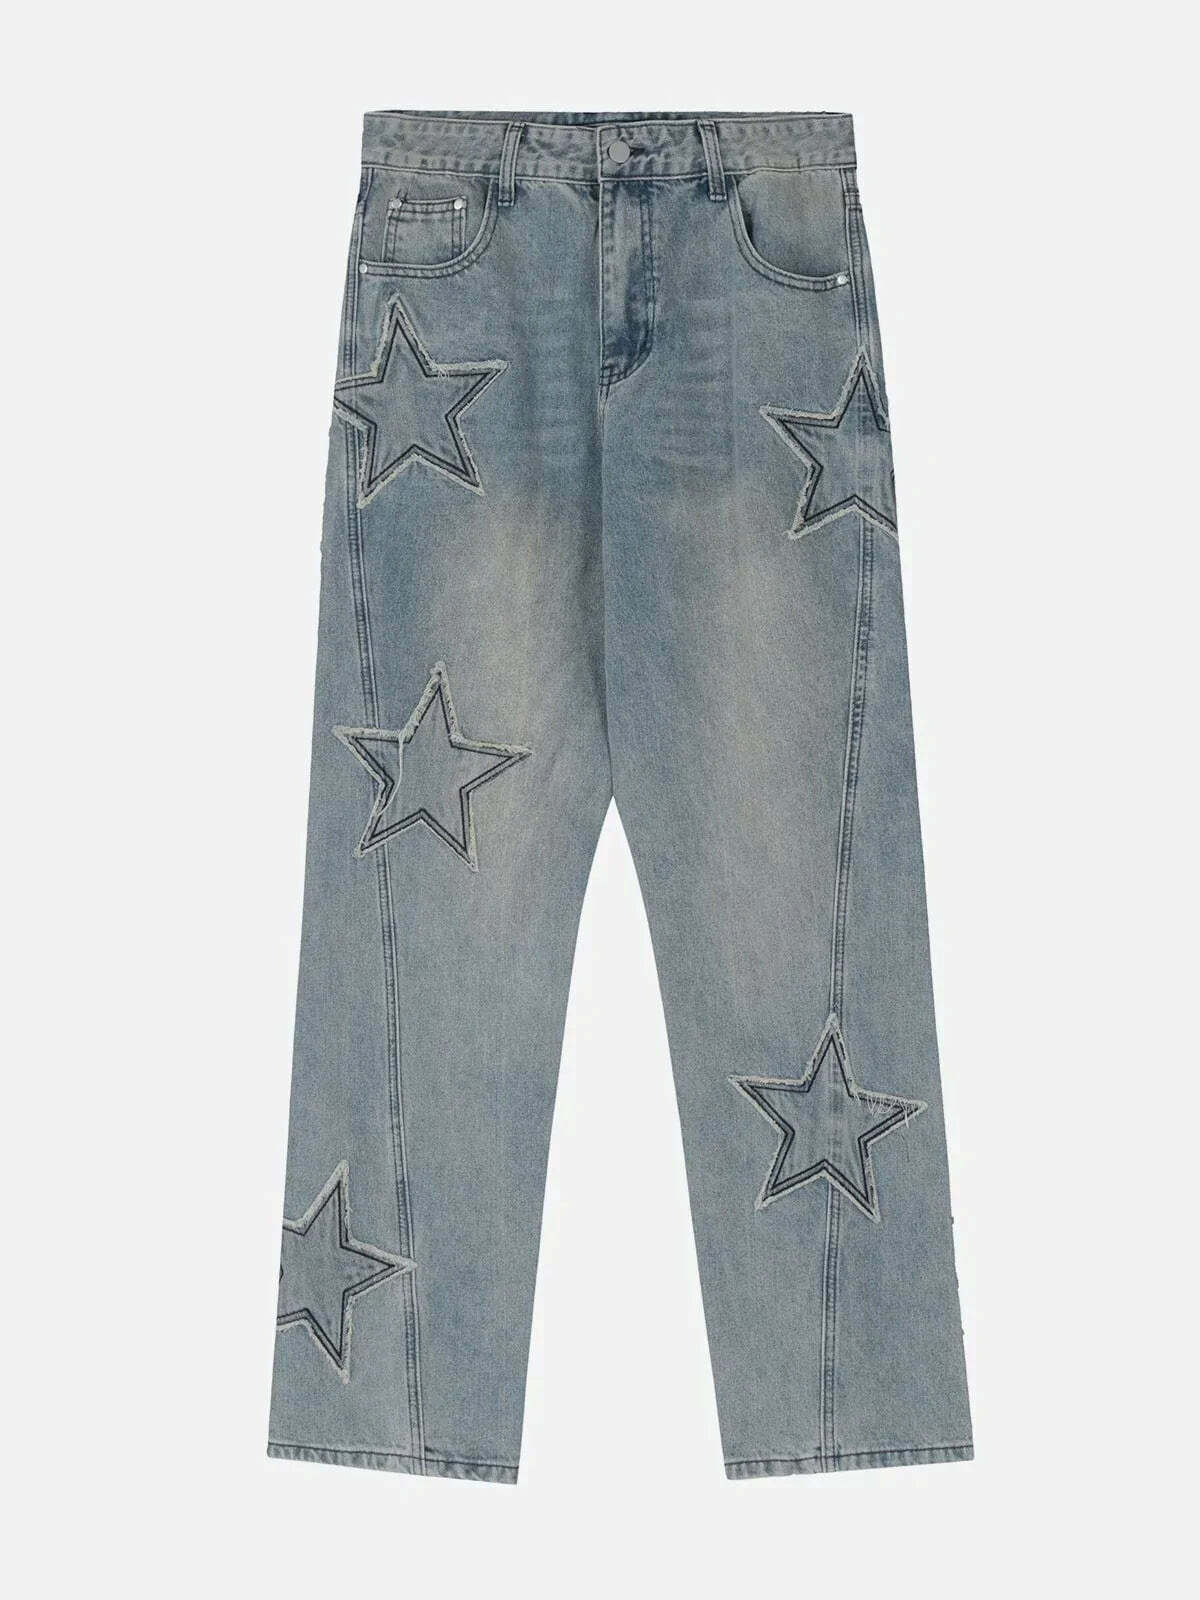 patchwork denim jeans edgy streetwear essential 2817